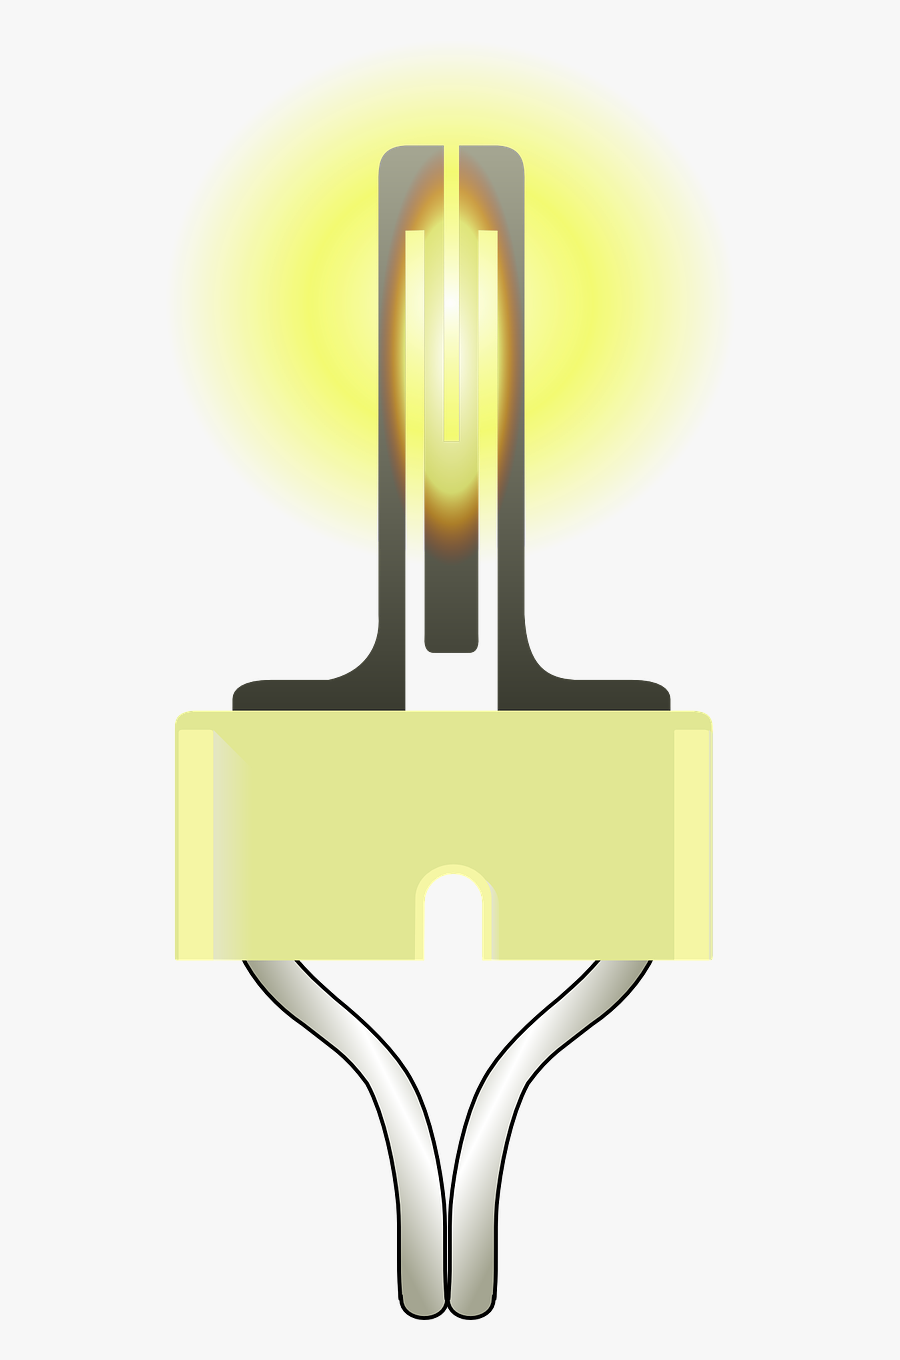 Incandescent Light Bulb, Transparent Clipart